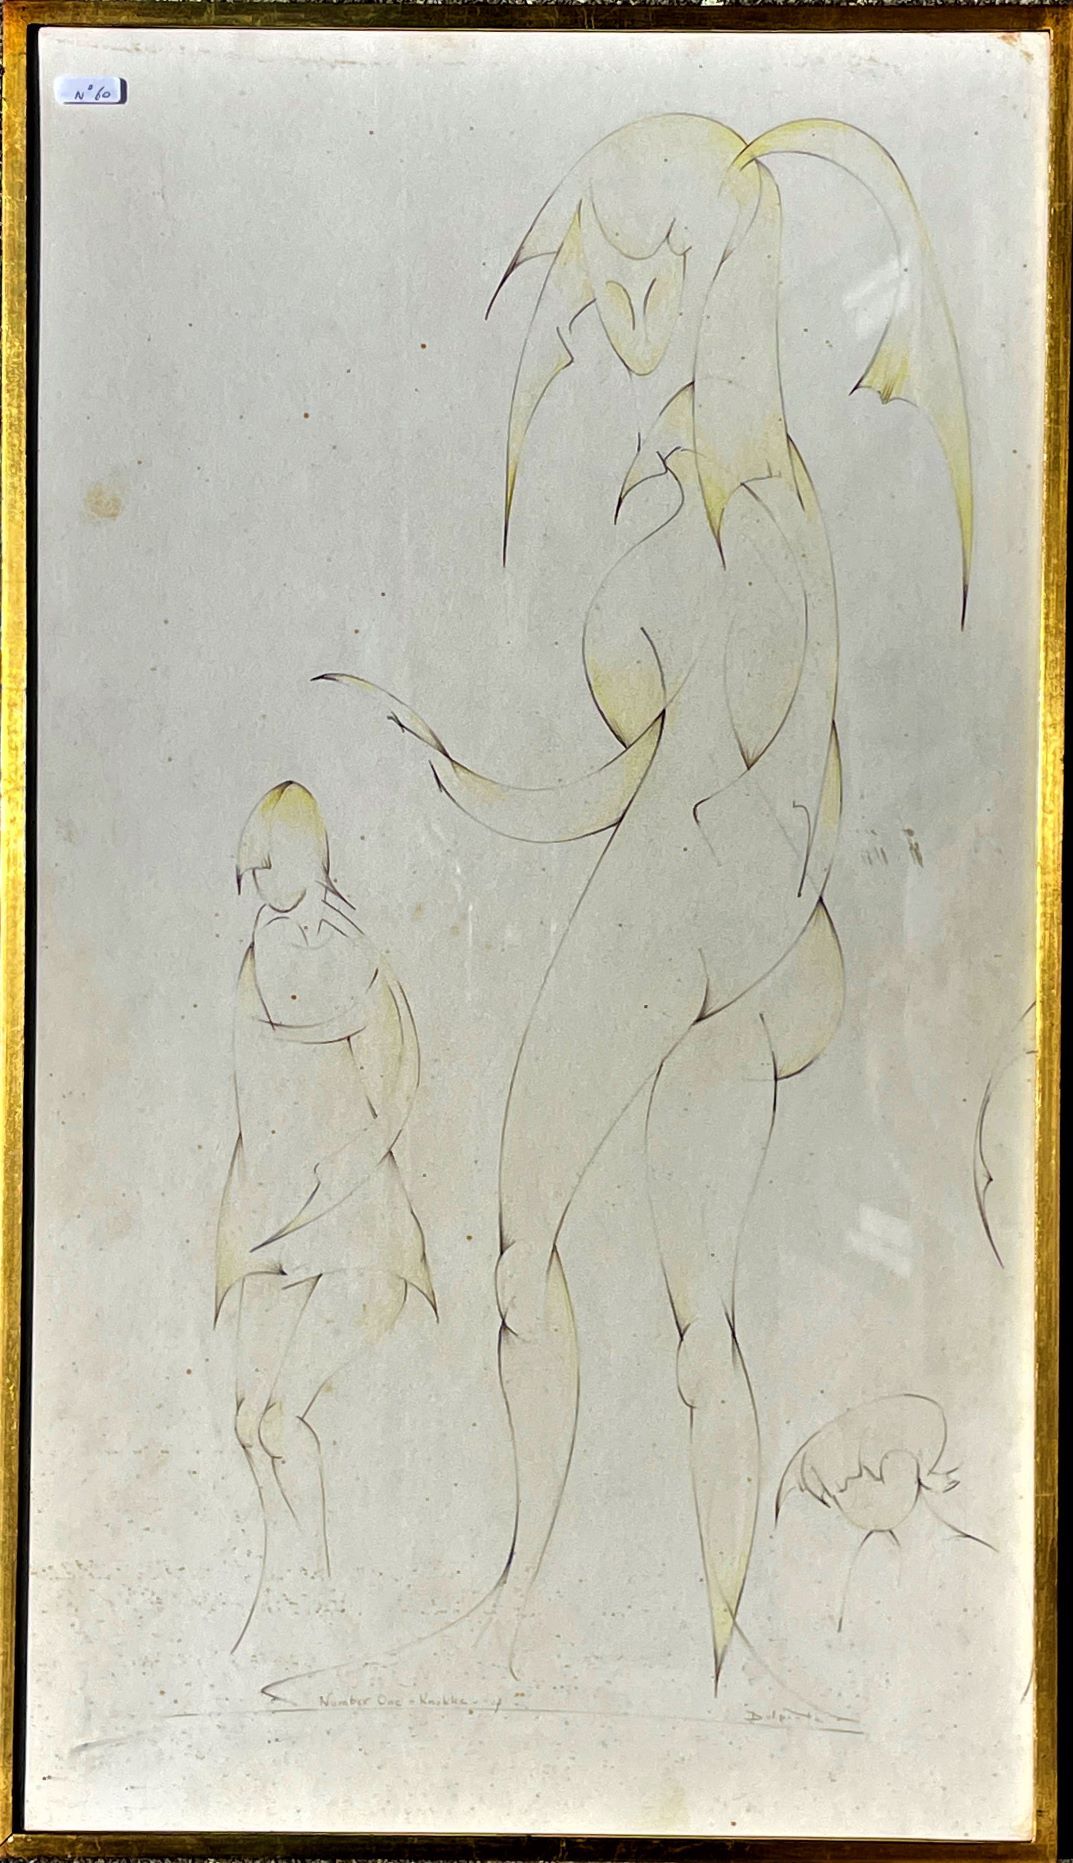 Null 德尔波特-查尔斯/原创作品 "一号 "描绘了一位母亲和她的孩子。 在Knokke 1967年签名并注明日期。 石墨和彩色铅笔。 纸张上有污渍的BE。 &hellip;